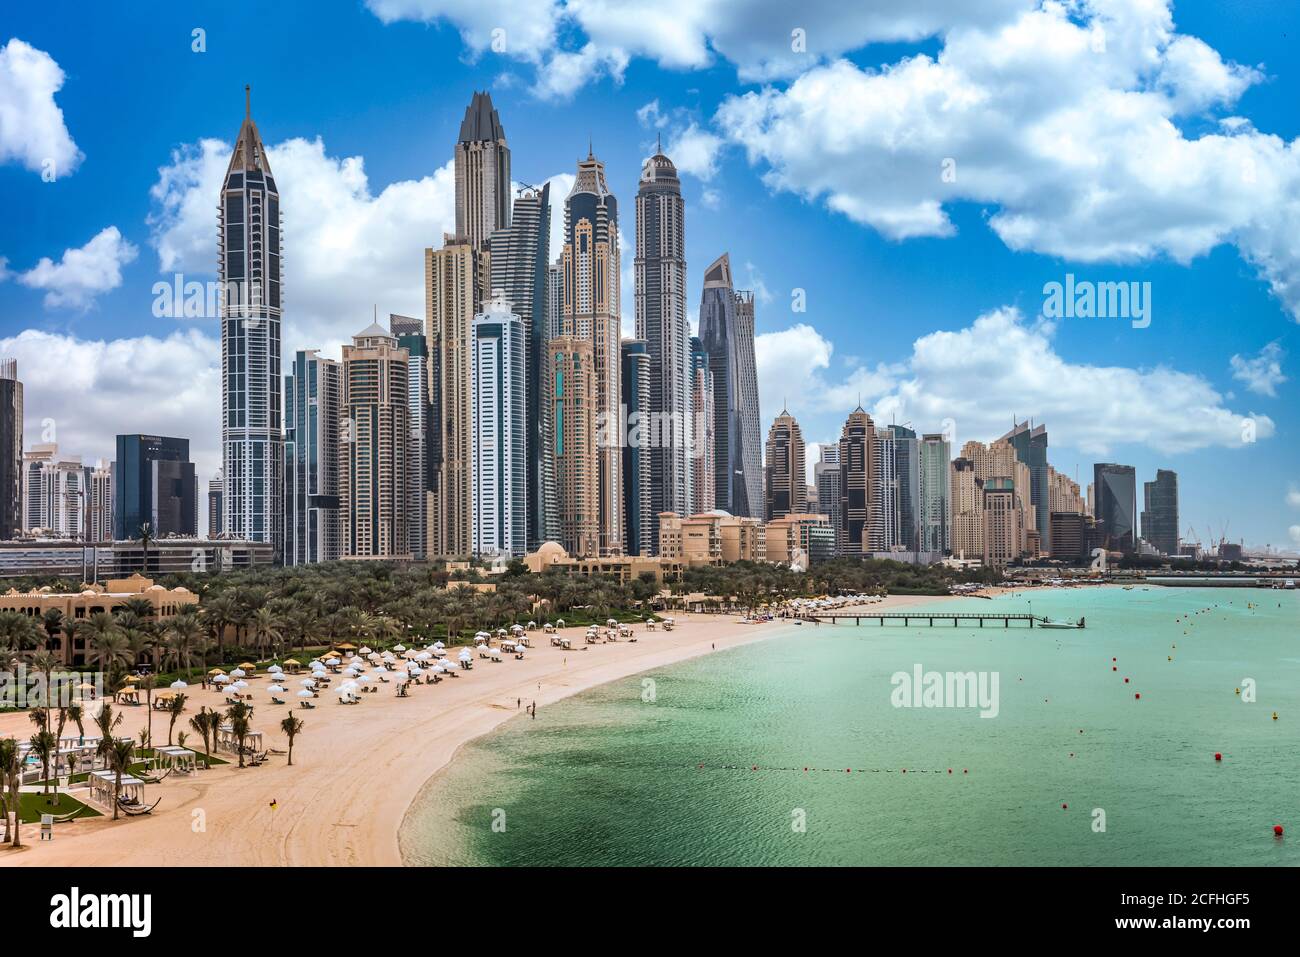 The marina skyline and beach in Dubai, UAE, Middle East. Stock Photo